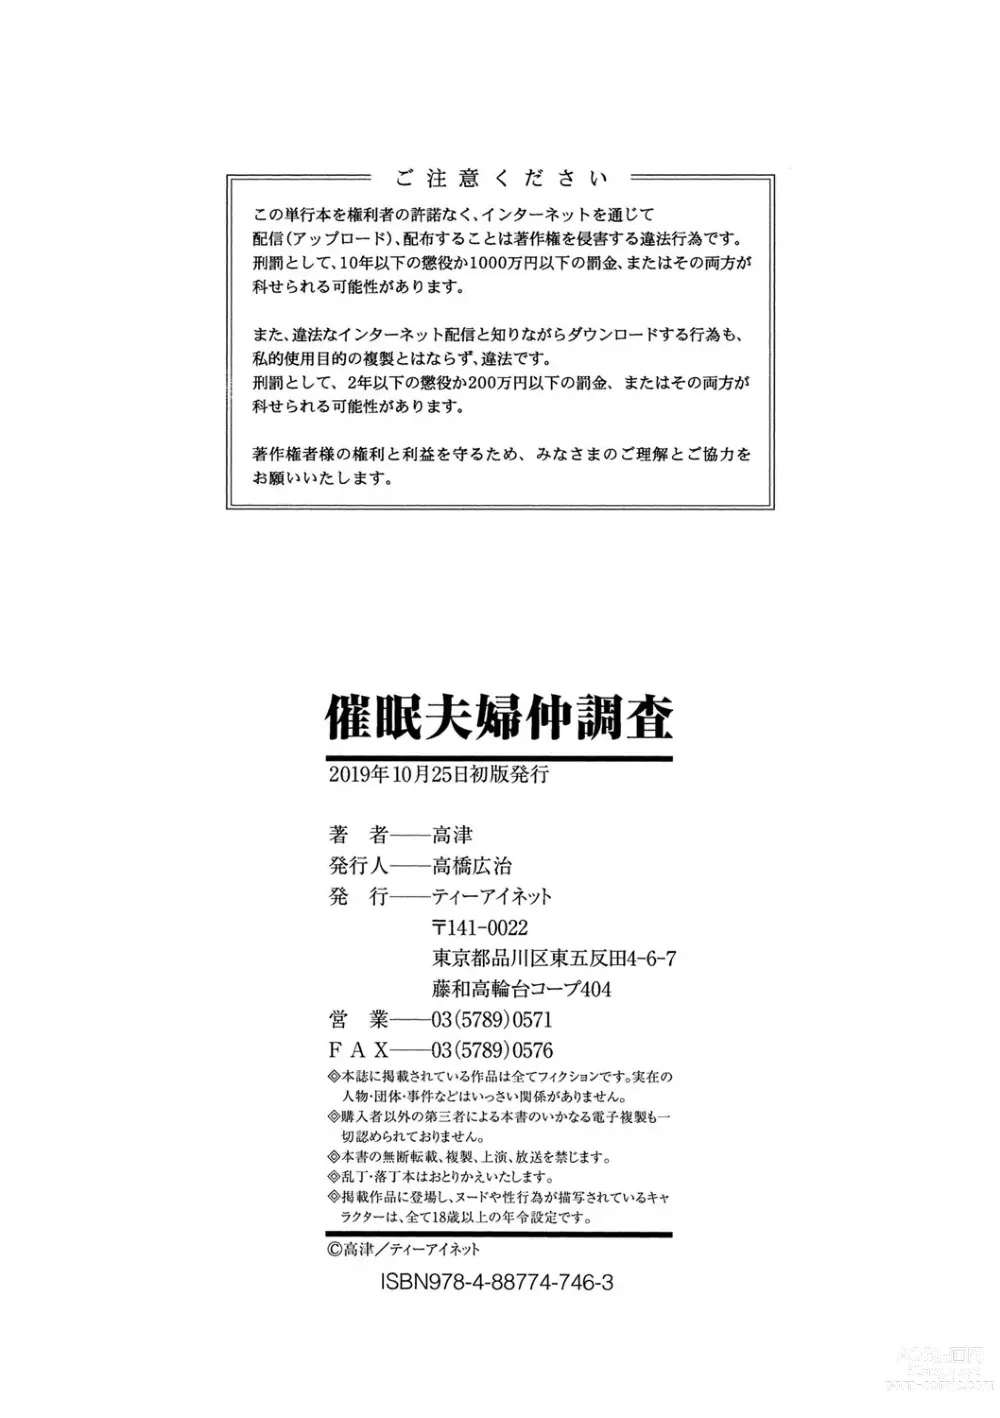 Page 199 of manga Saimin Fuufunaka Chousa - Investigate marital relationship with hypnosis